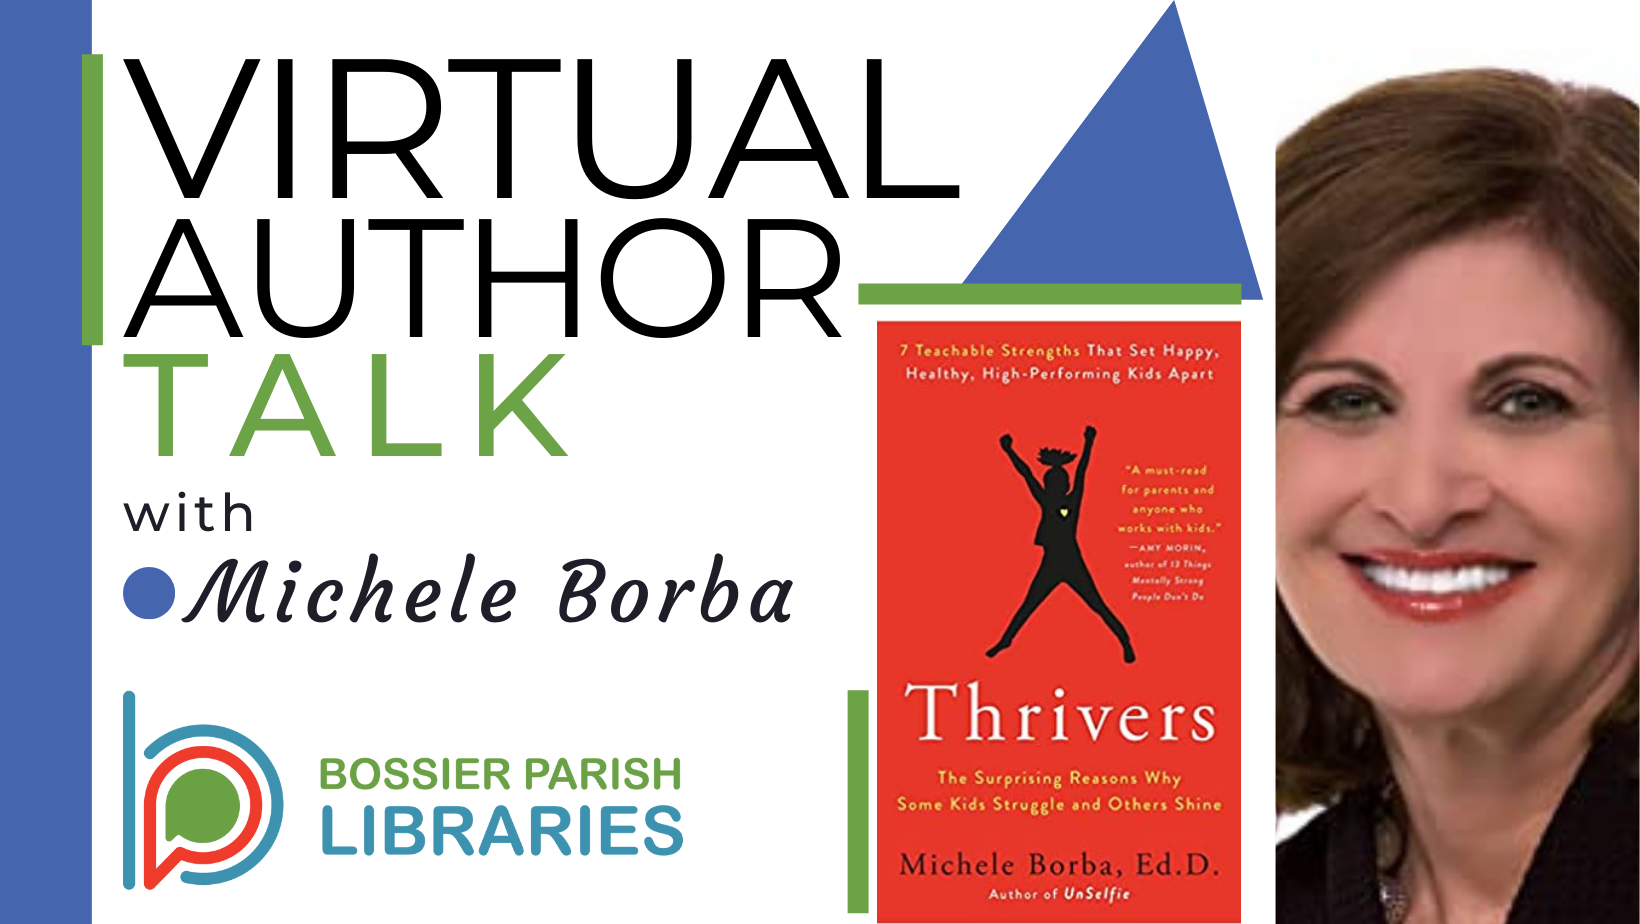 Virtual Author Talk with Michele Borba